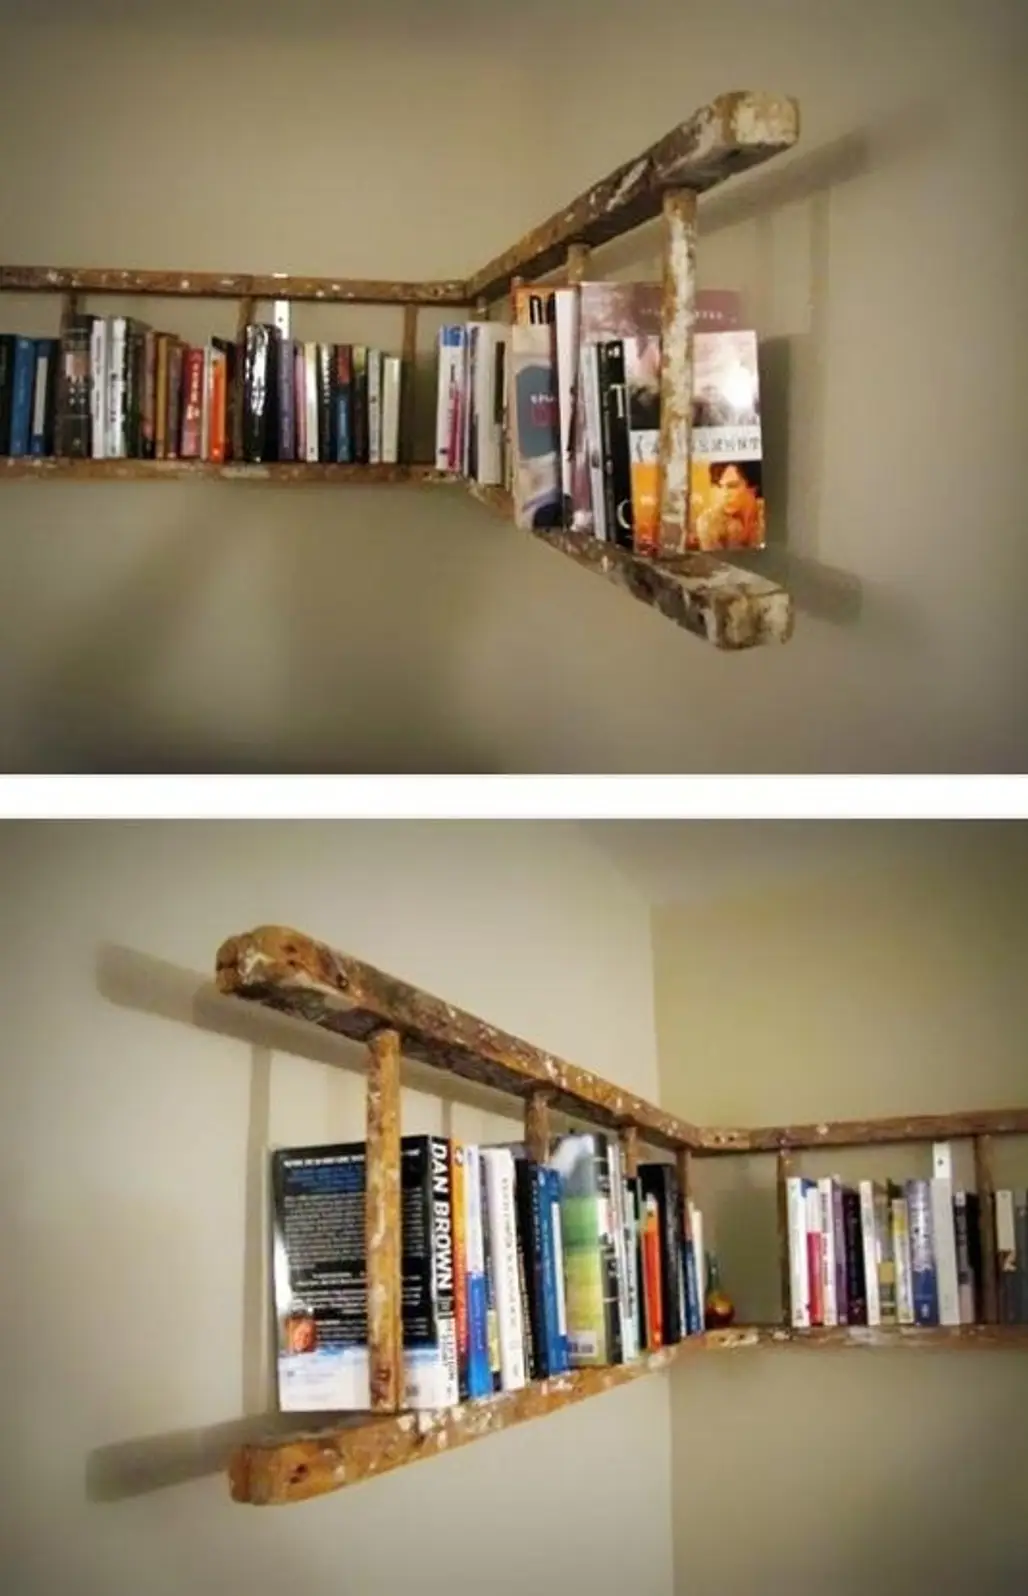 Ladder Bookshelf